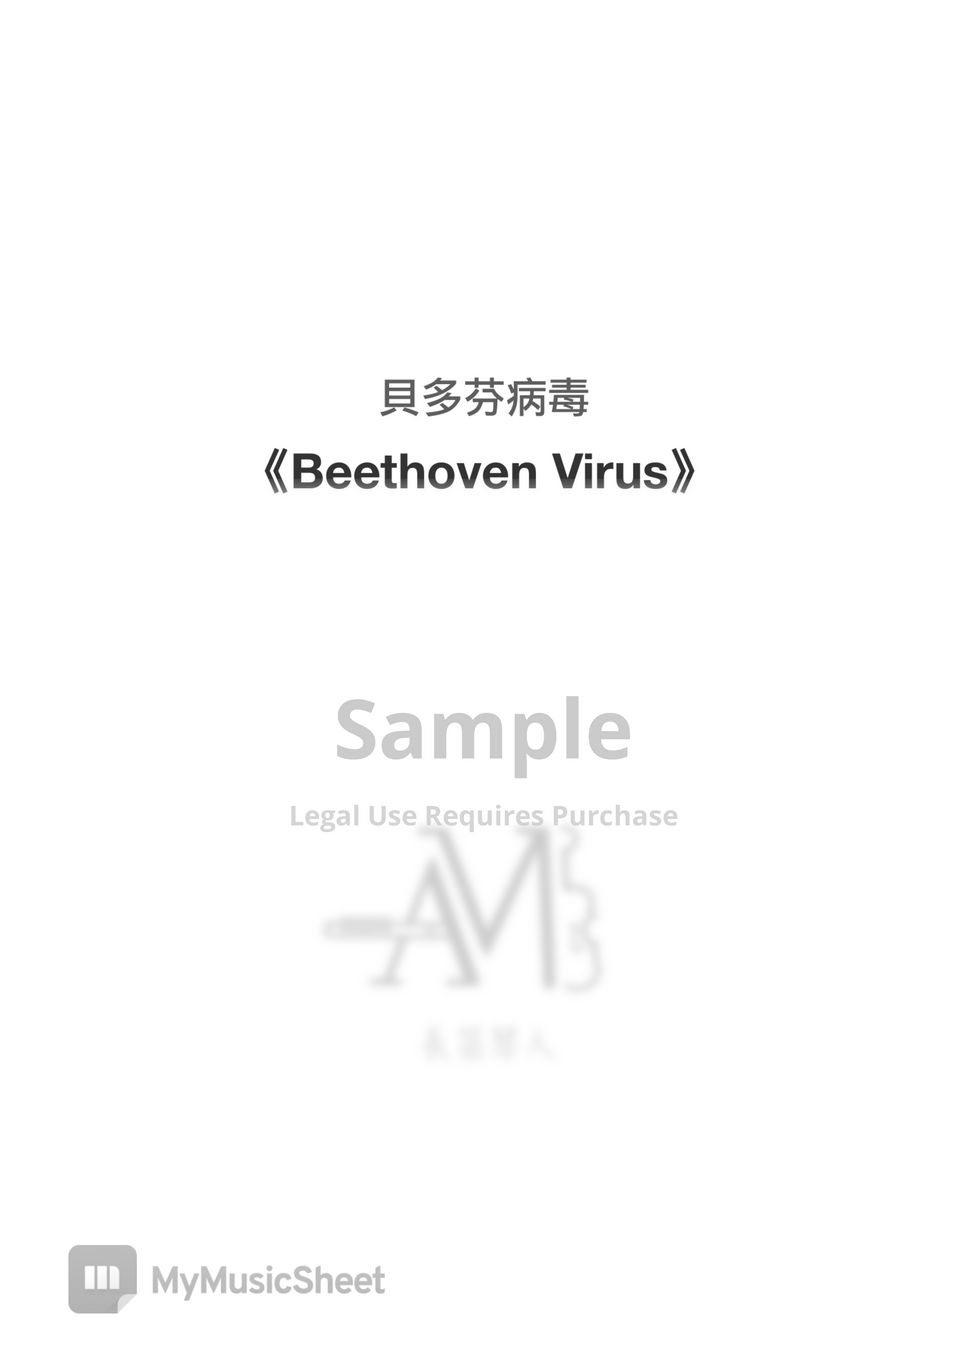 Diana Boncheca - 貝多芬病毒 Beethoven Virus (長笛/小提琴獨奏譜) by 長笛琴人